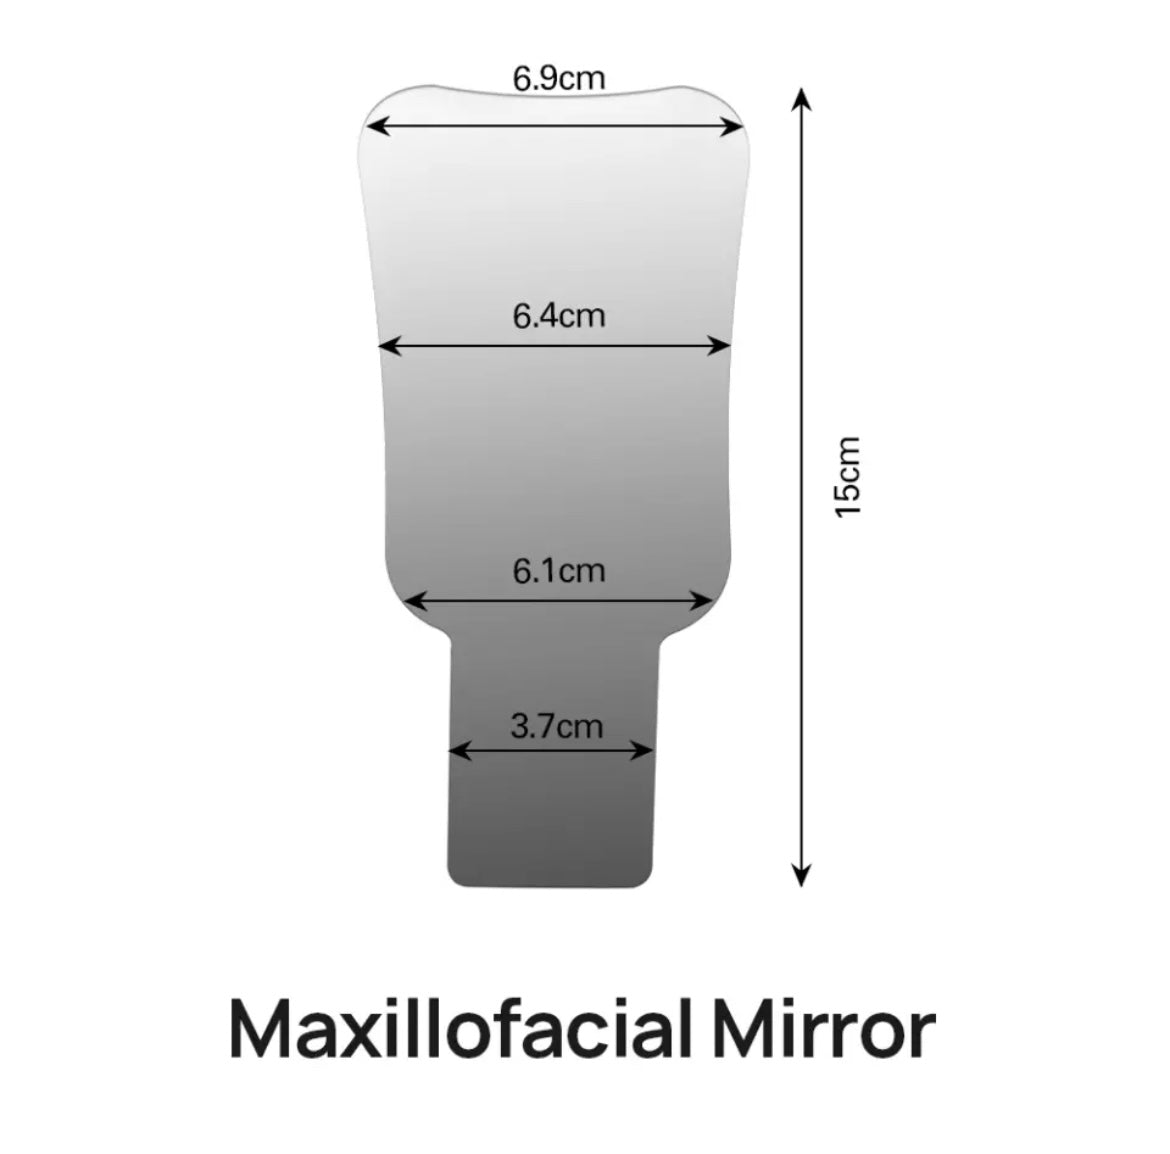 antifog mirror system for dental photographyz66jq